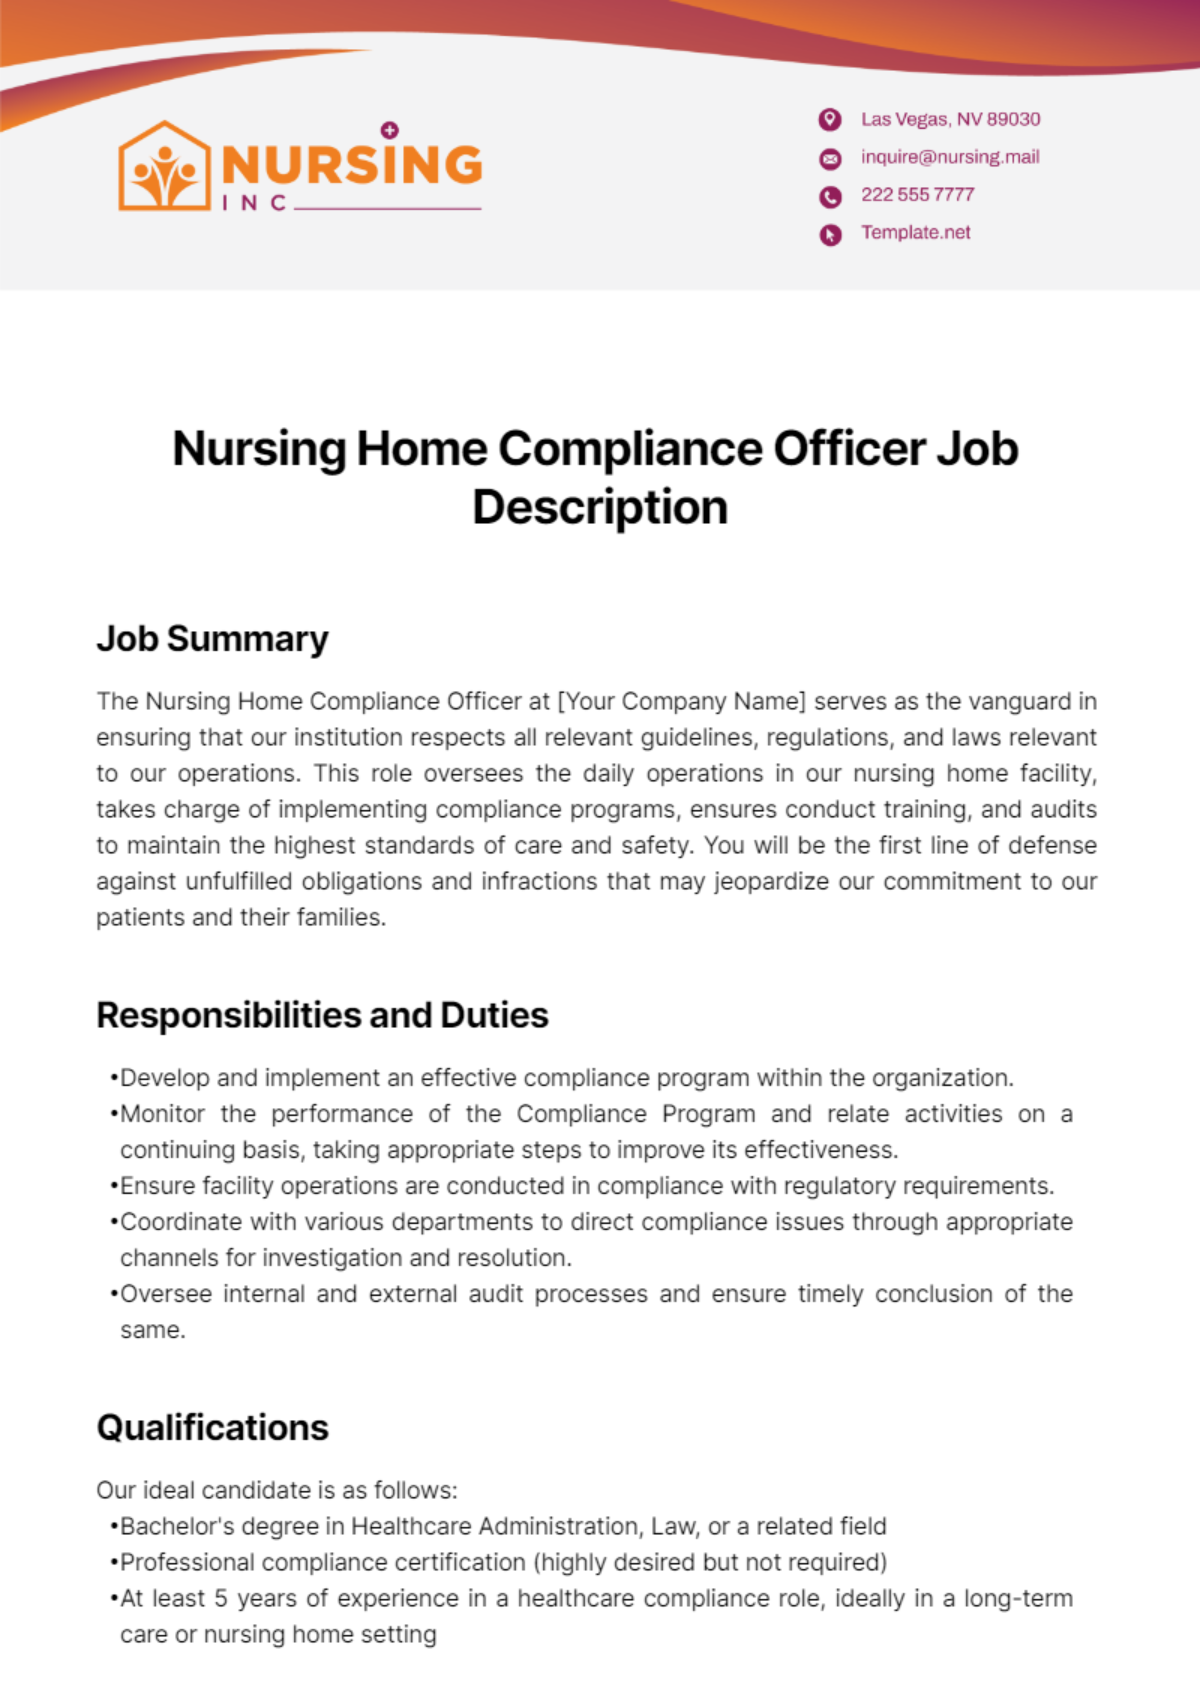 Nursing Home Compliance Officer Job Description Template